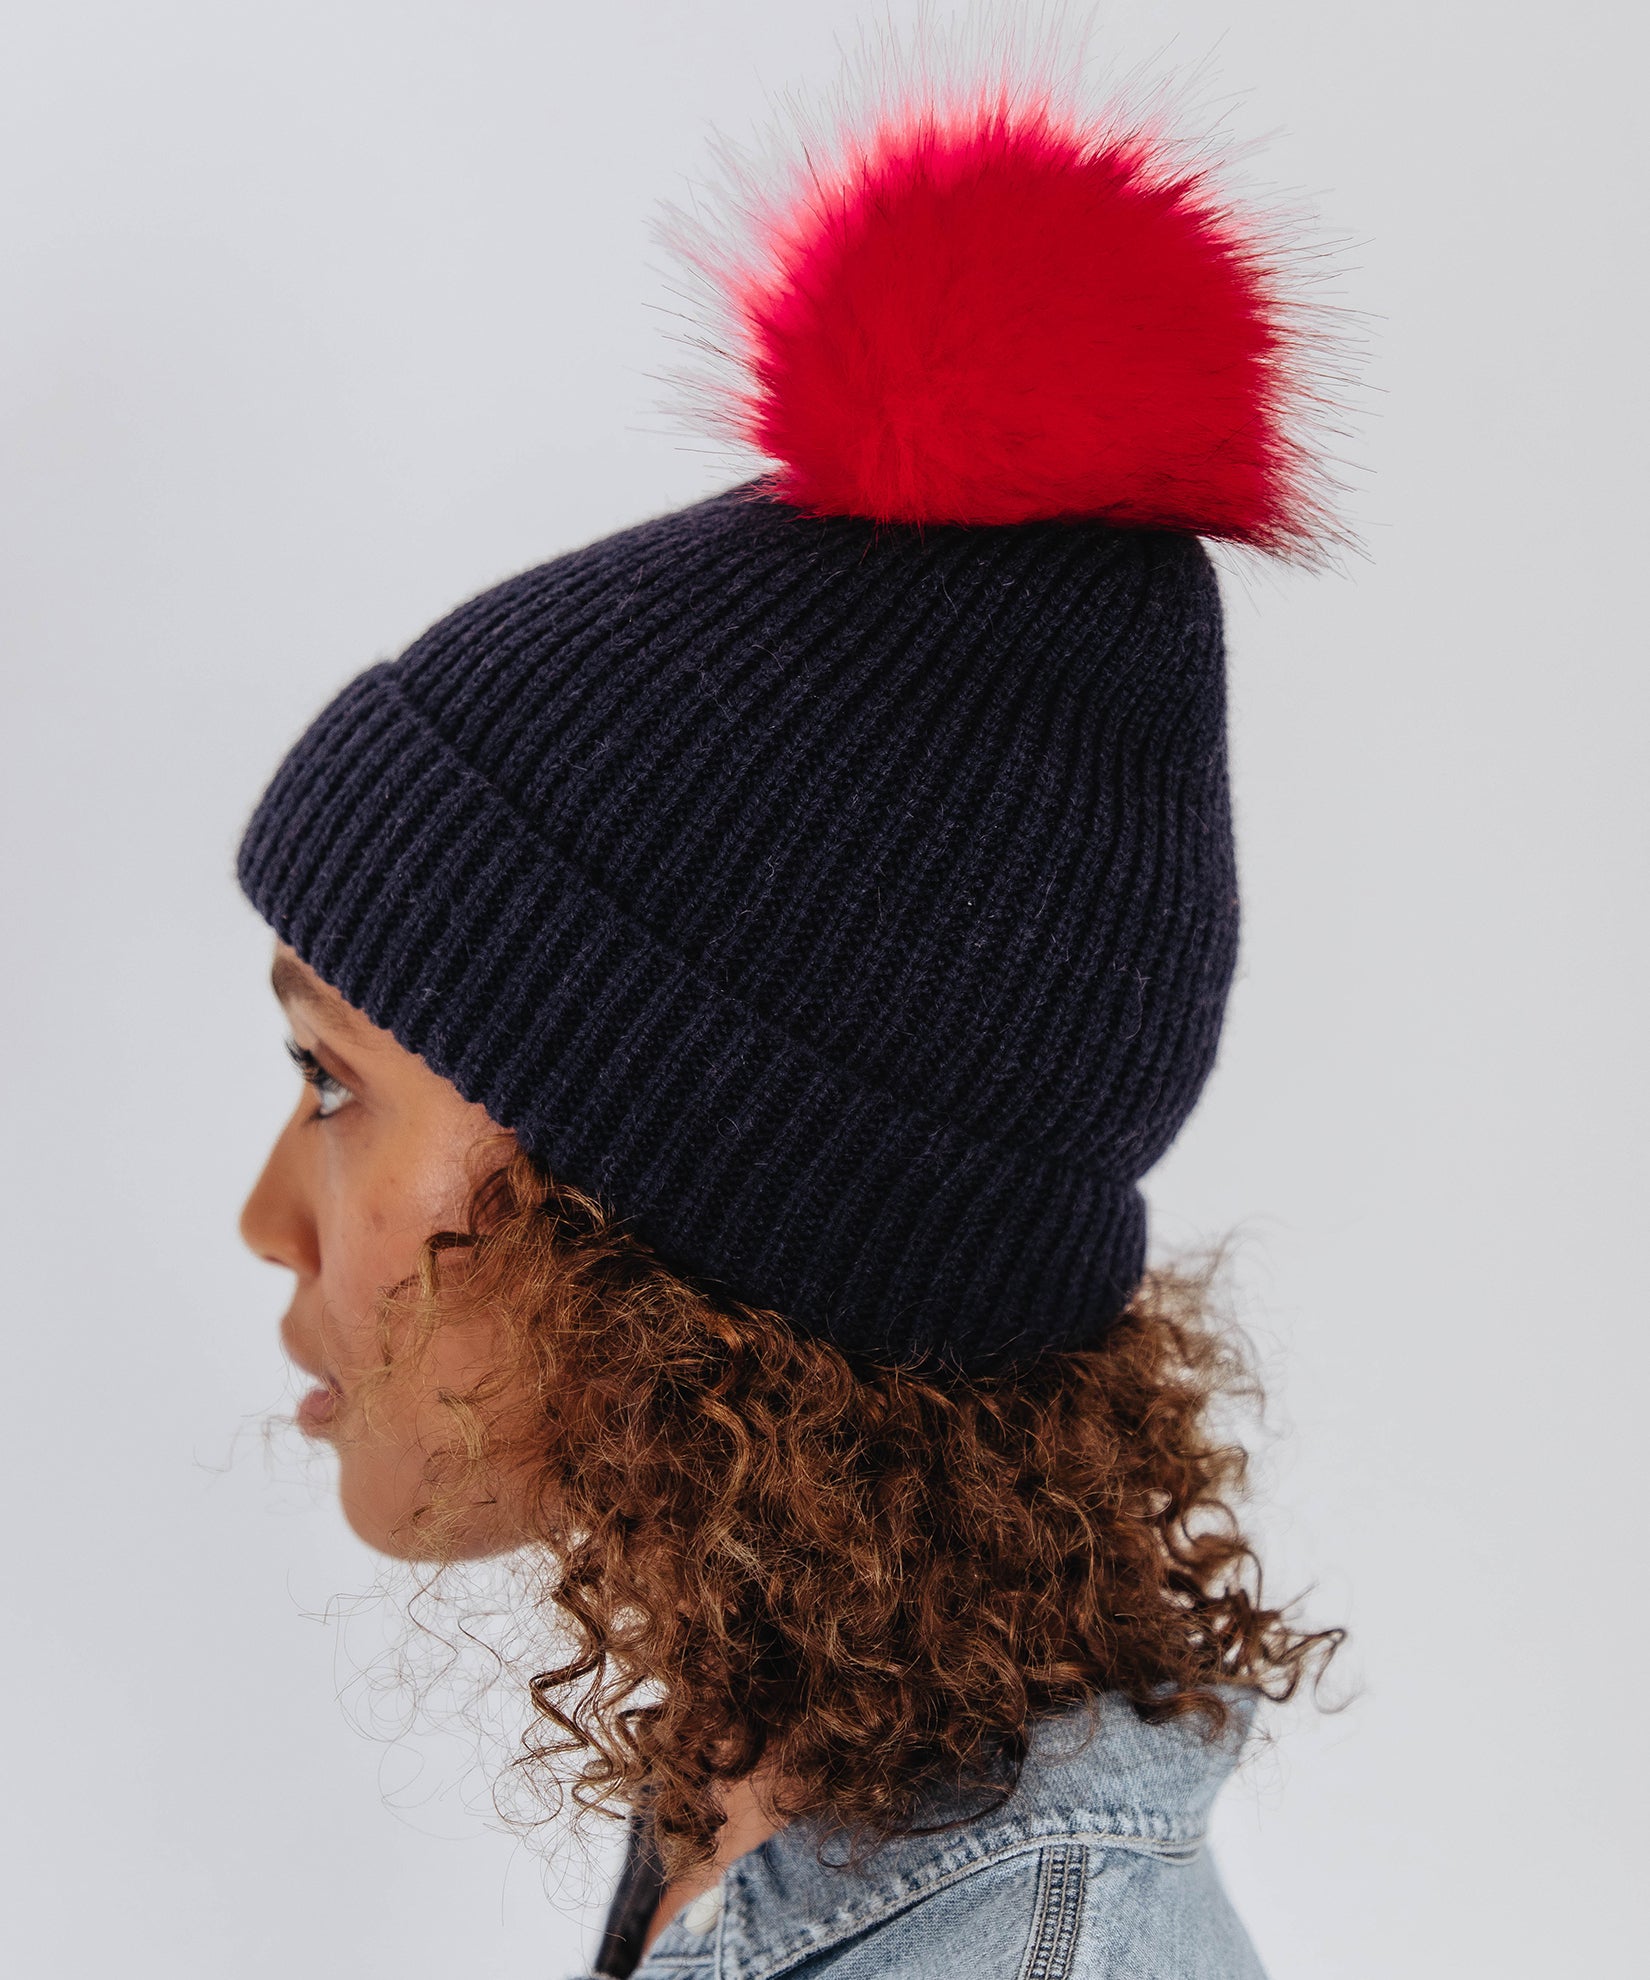 Ribbed Red Cashmere Hat with Black Pom-Pom – Loveknitz